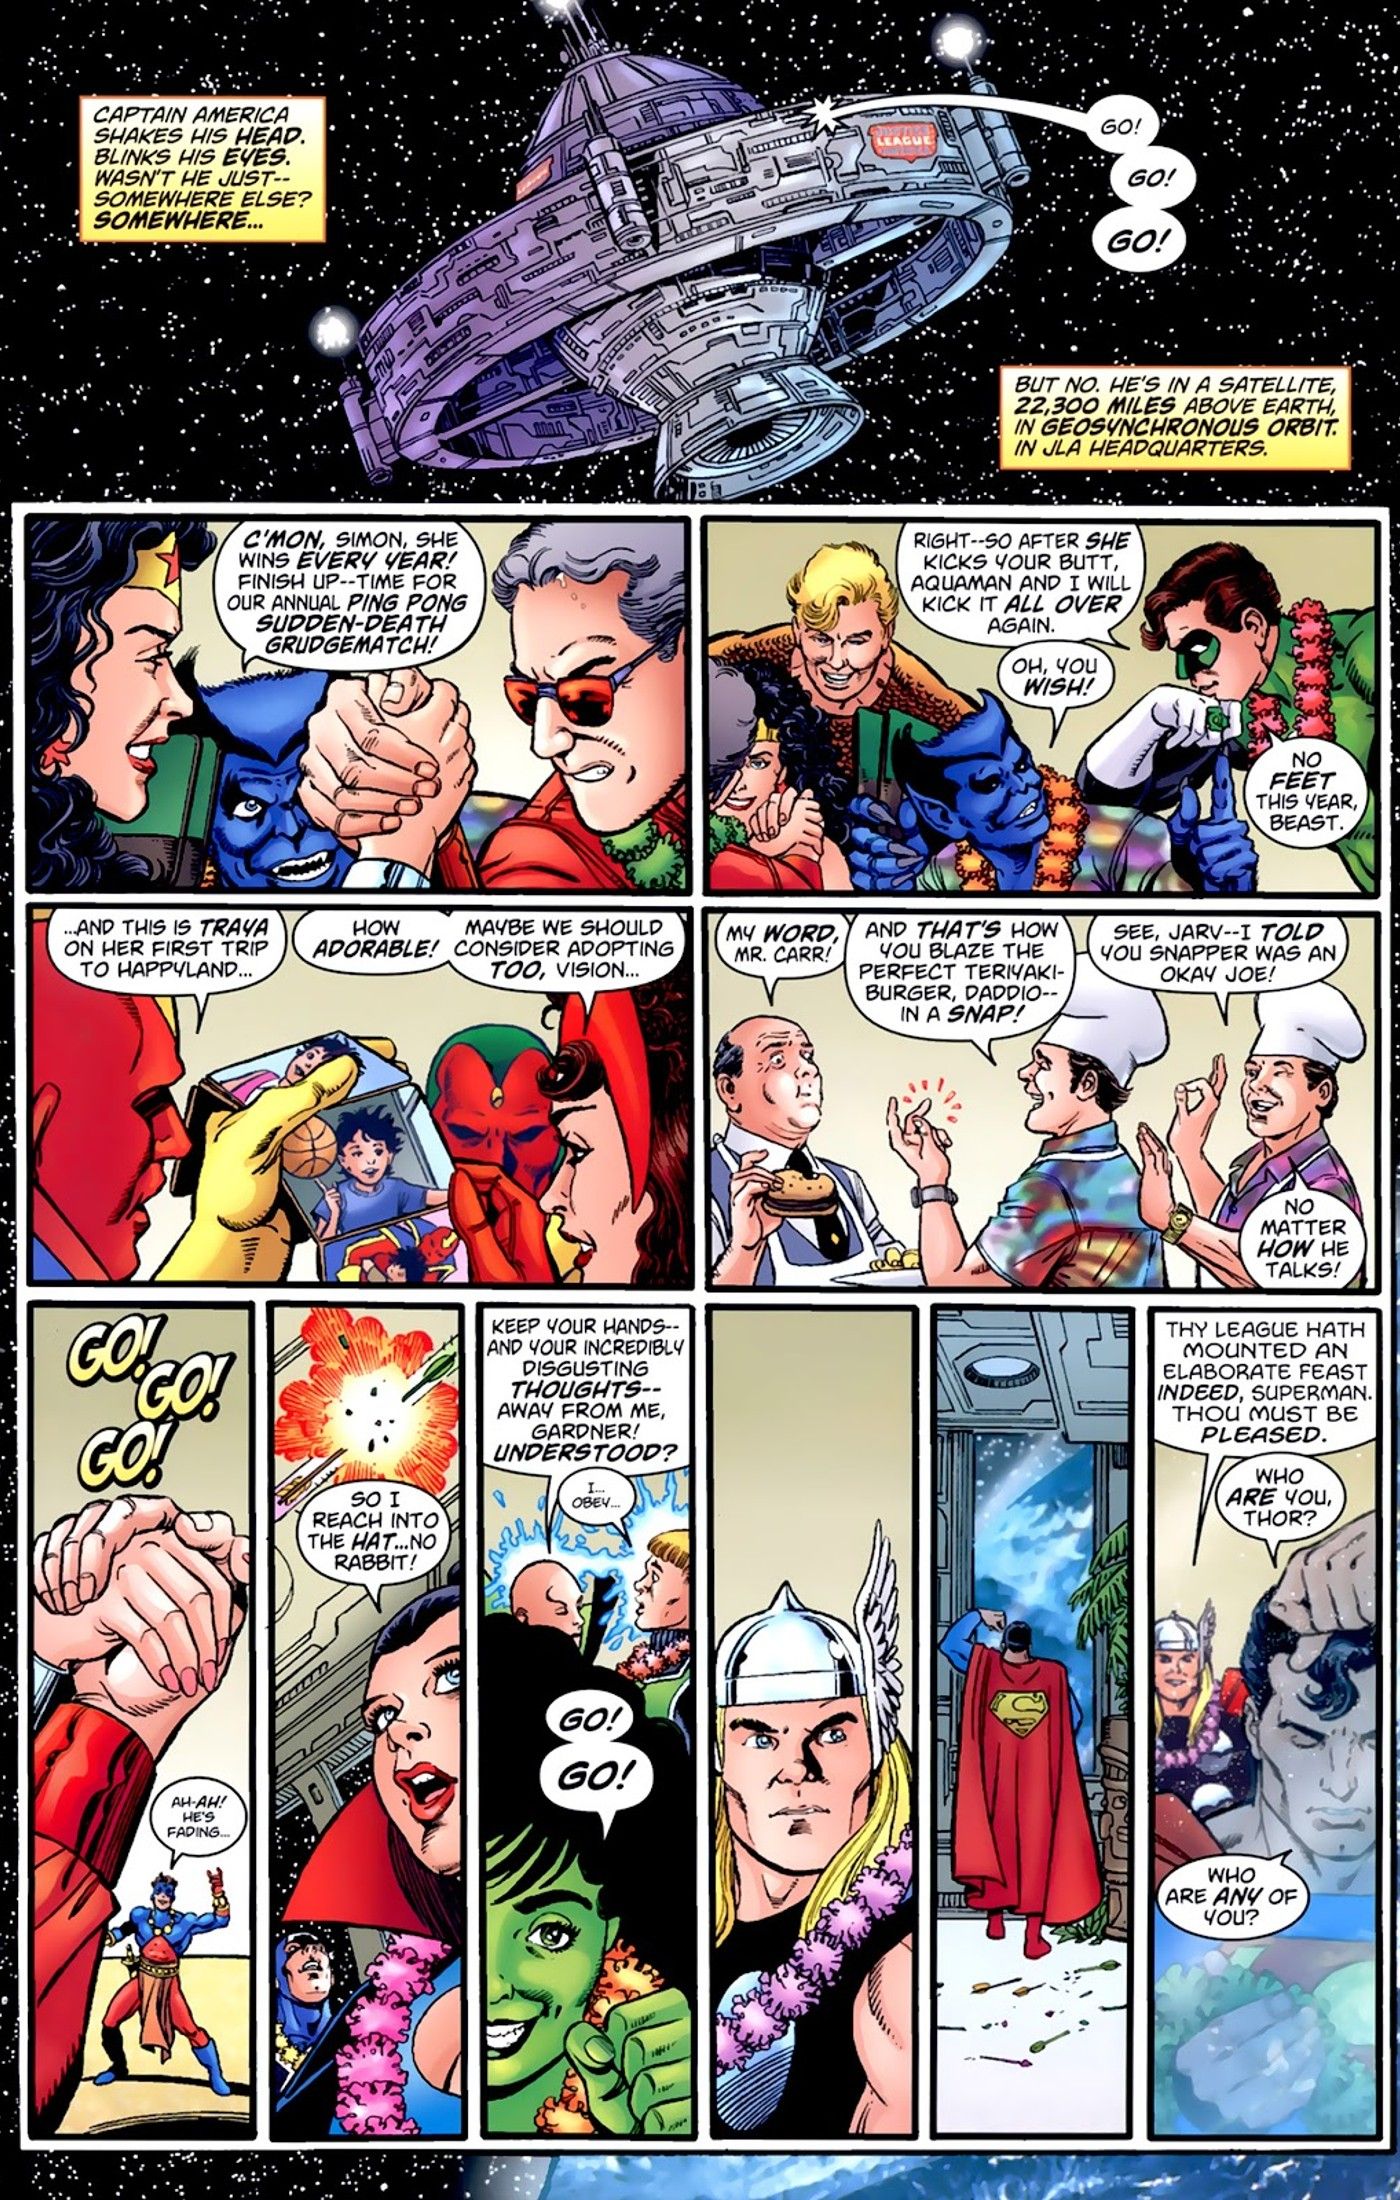 panels from JLA/Avengers #2